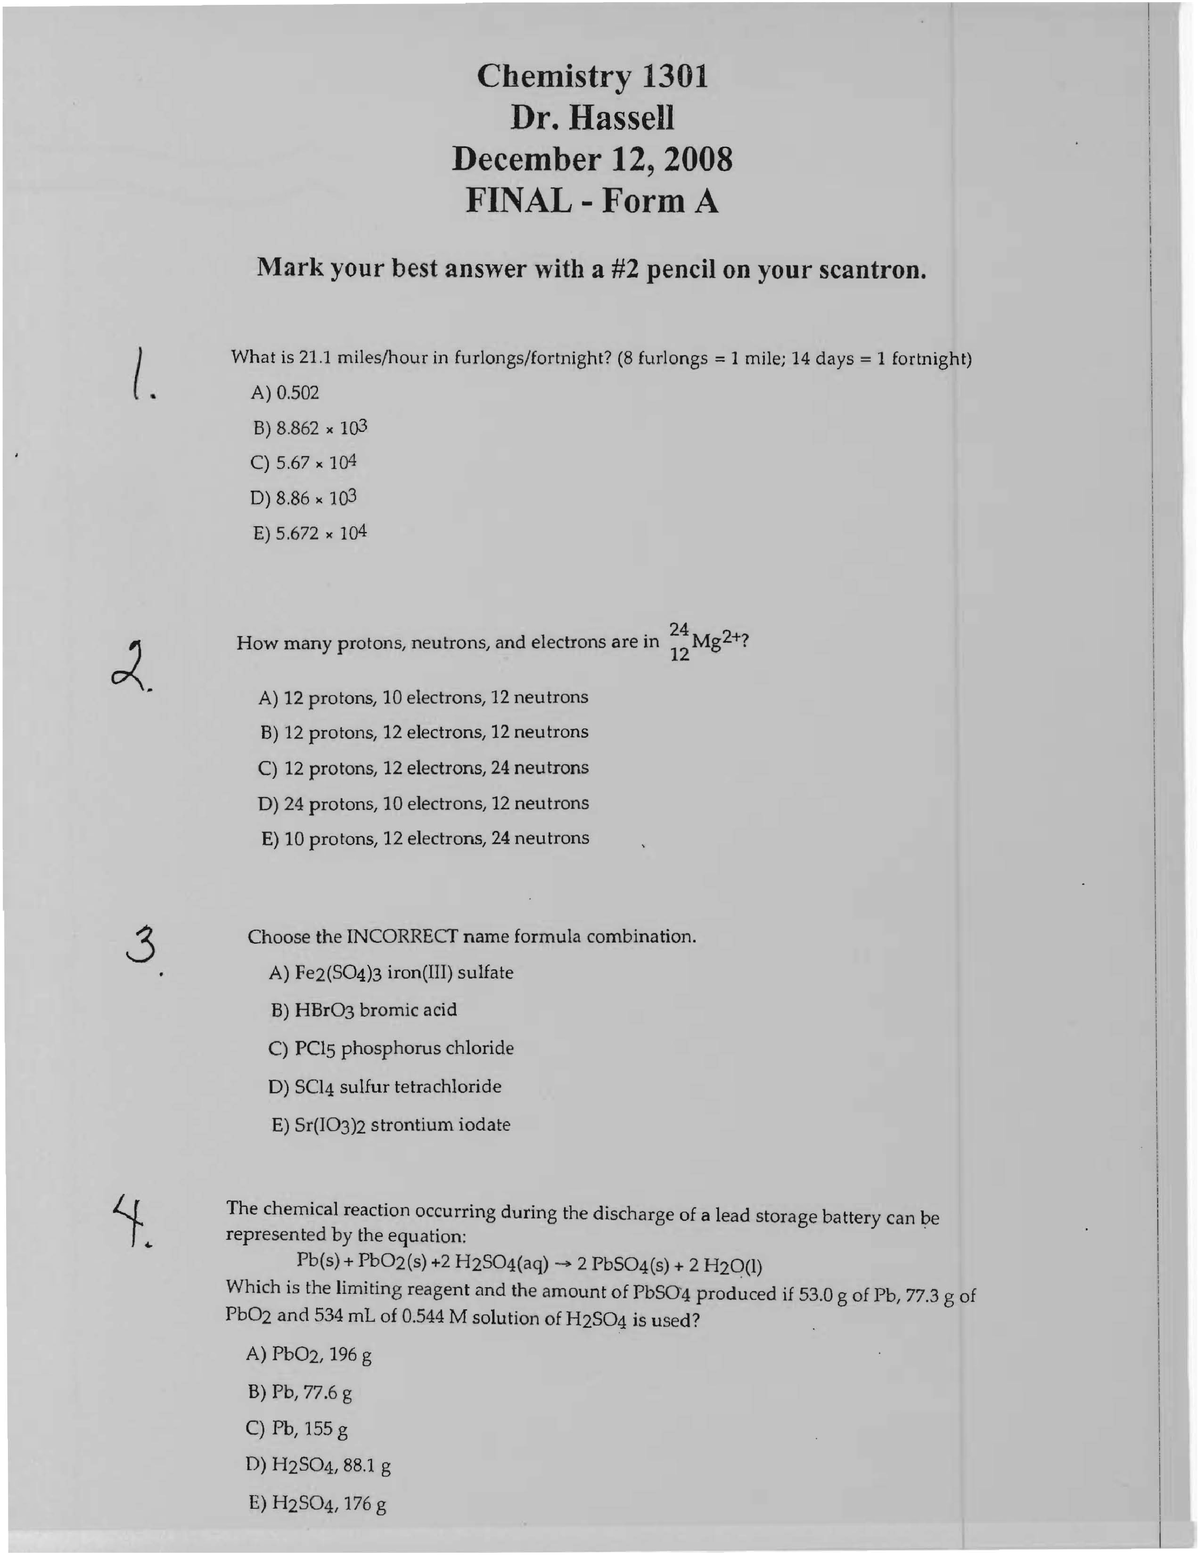 DES-6322 PDF Demo | Sns-Brigh10